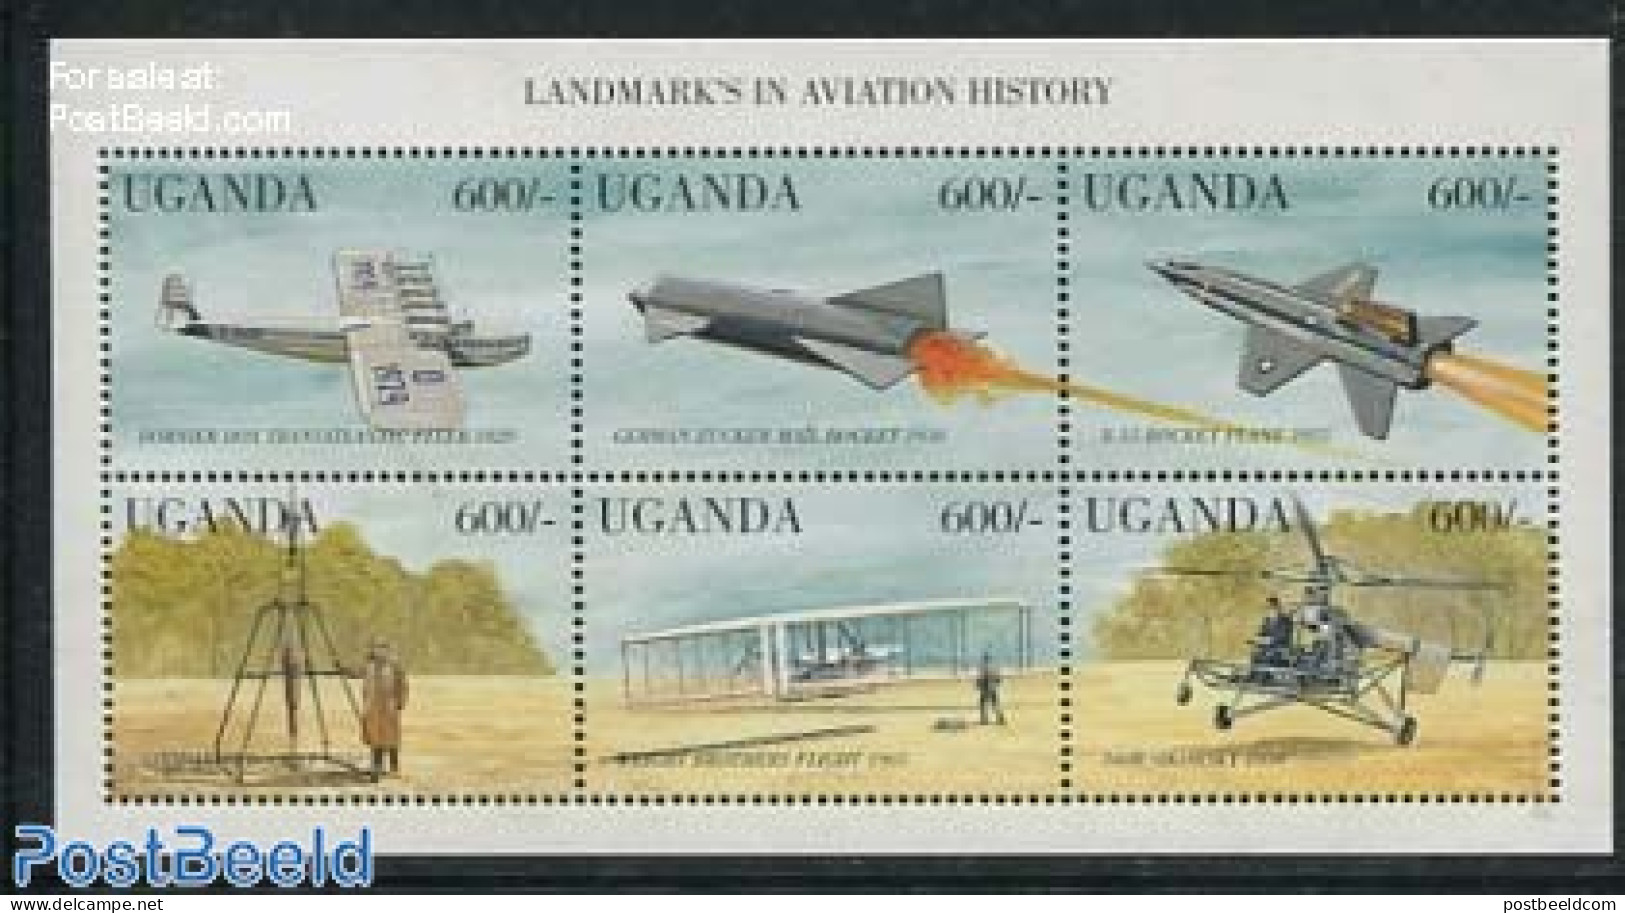 Uganda 1998 Aeroplanes 6v M/s (6x600), Mint NH, Transport - Helicopters - Aircraft & Aviation - Elicotteri